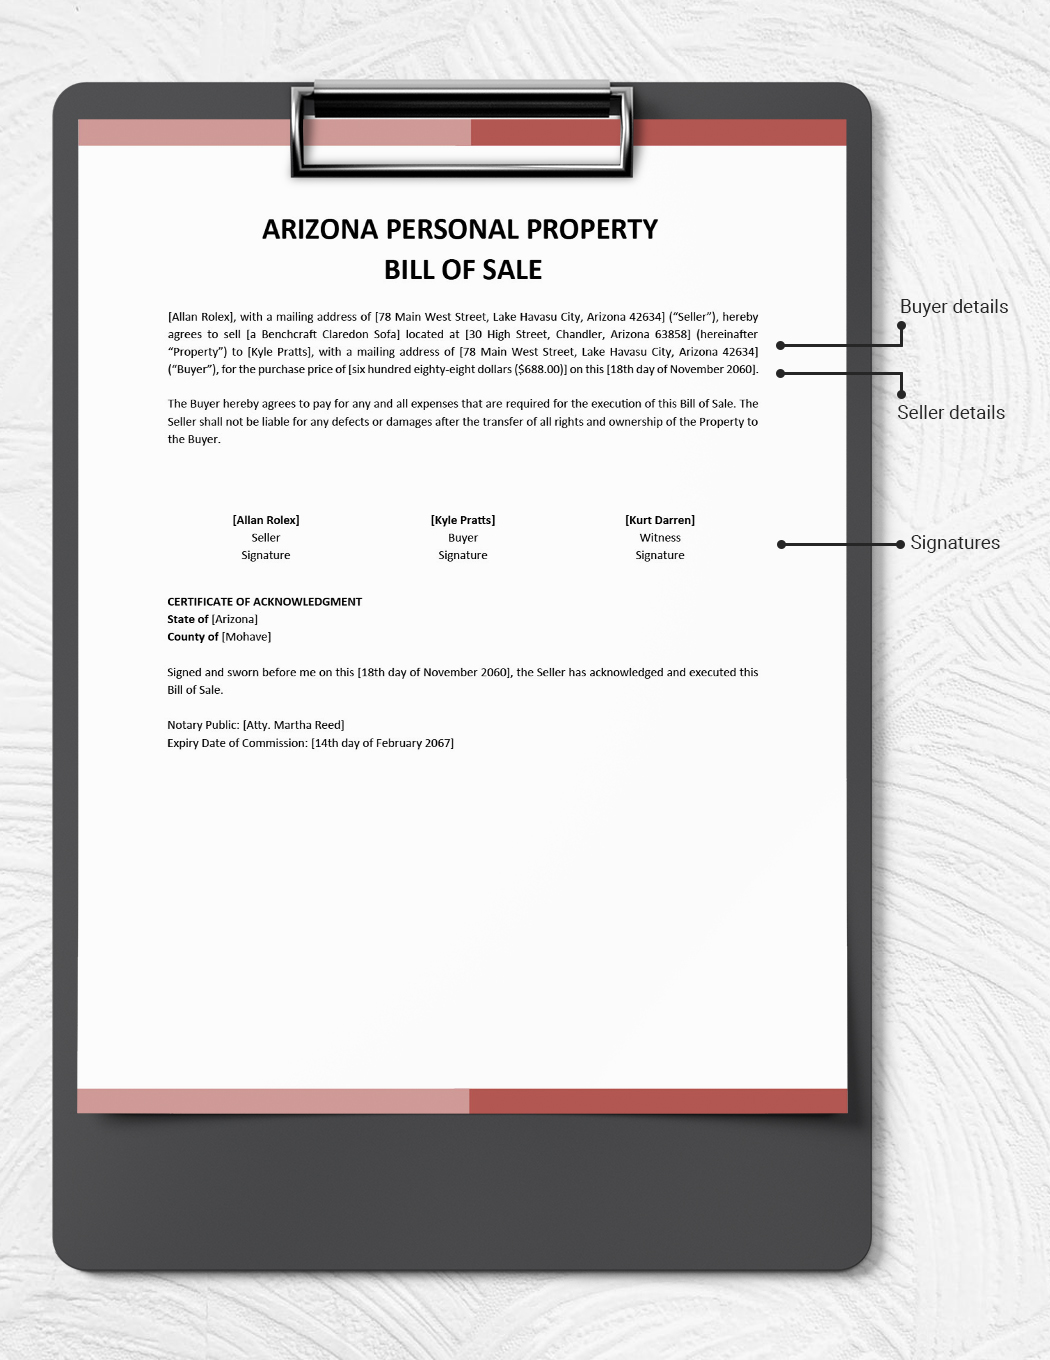 Arizona Personal Property Bill of Sale Template